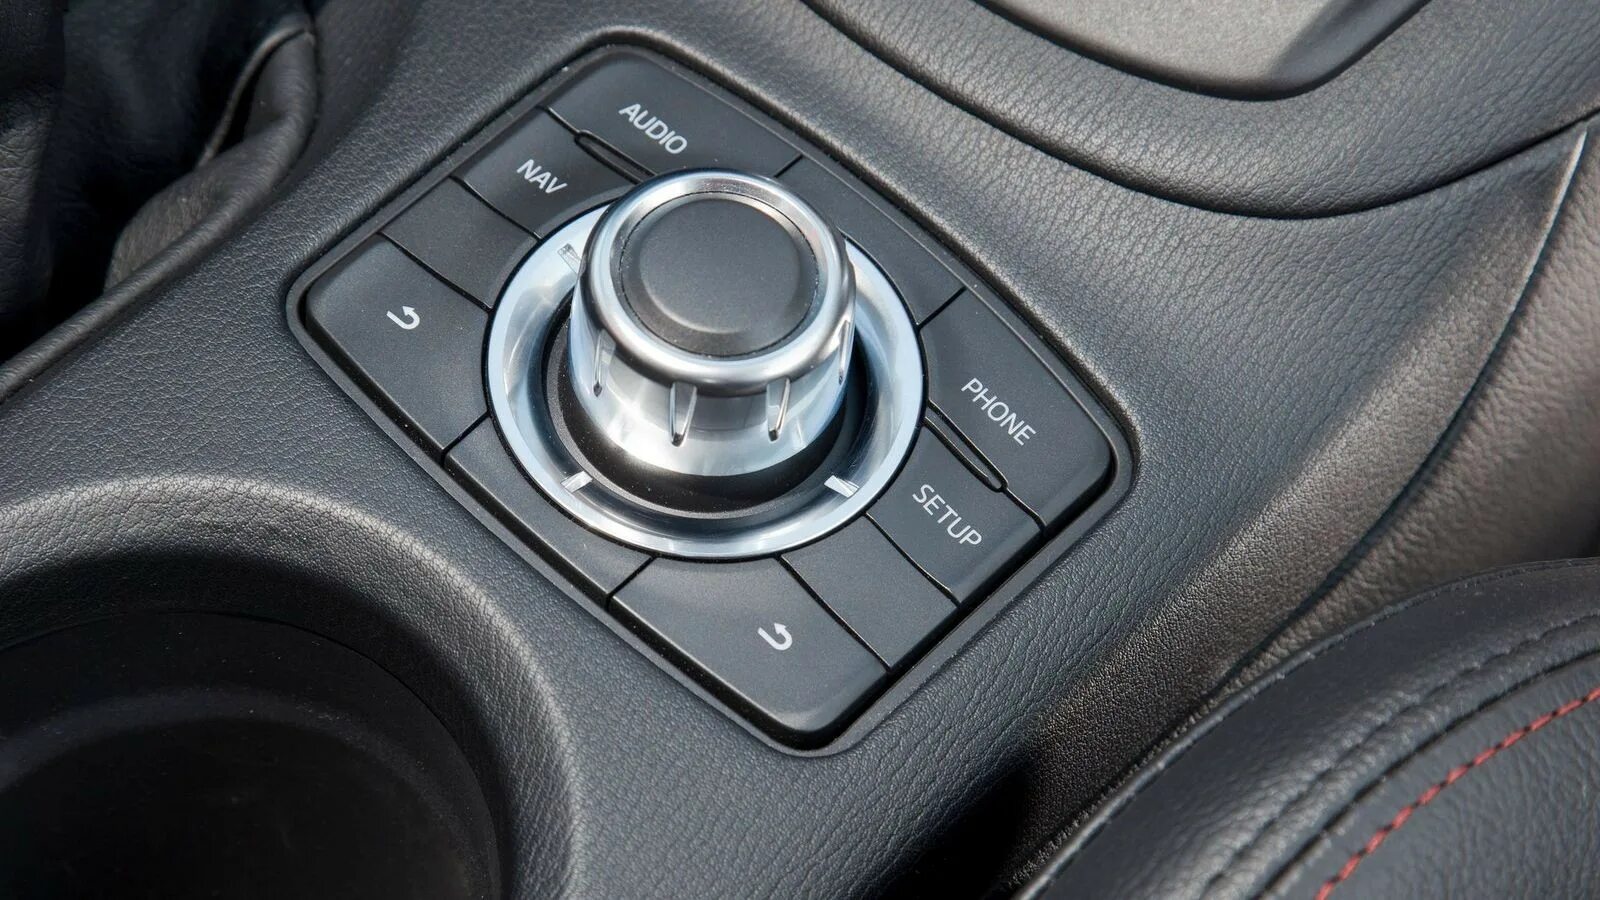 Кнопка полного привода Мазда cx5. Мазда CX-5 2015 полный привод кнопка. Mazda CX-5 Active переключатель привода. Джойстик мультимедиа Mazda CX-5 2012. Раздатка сх5